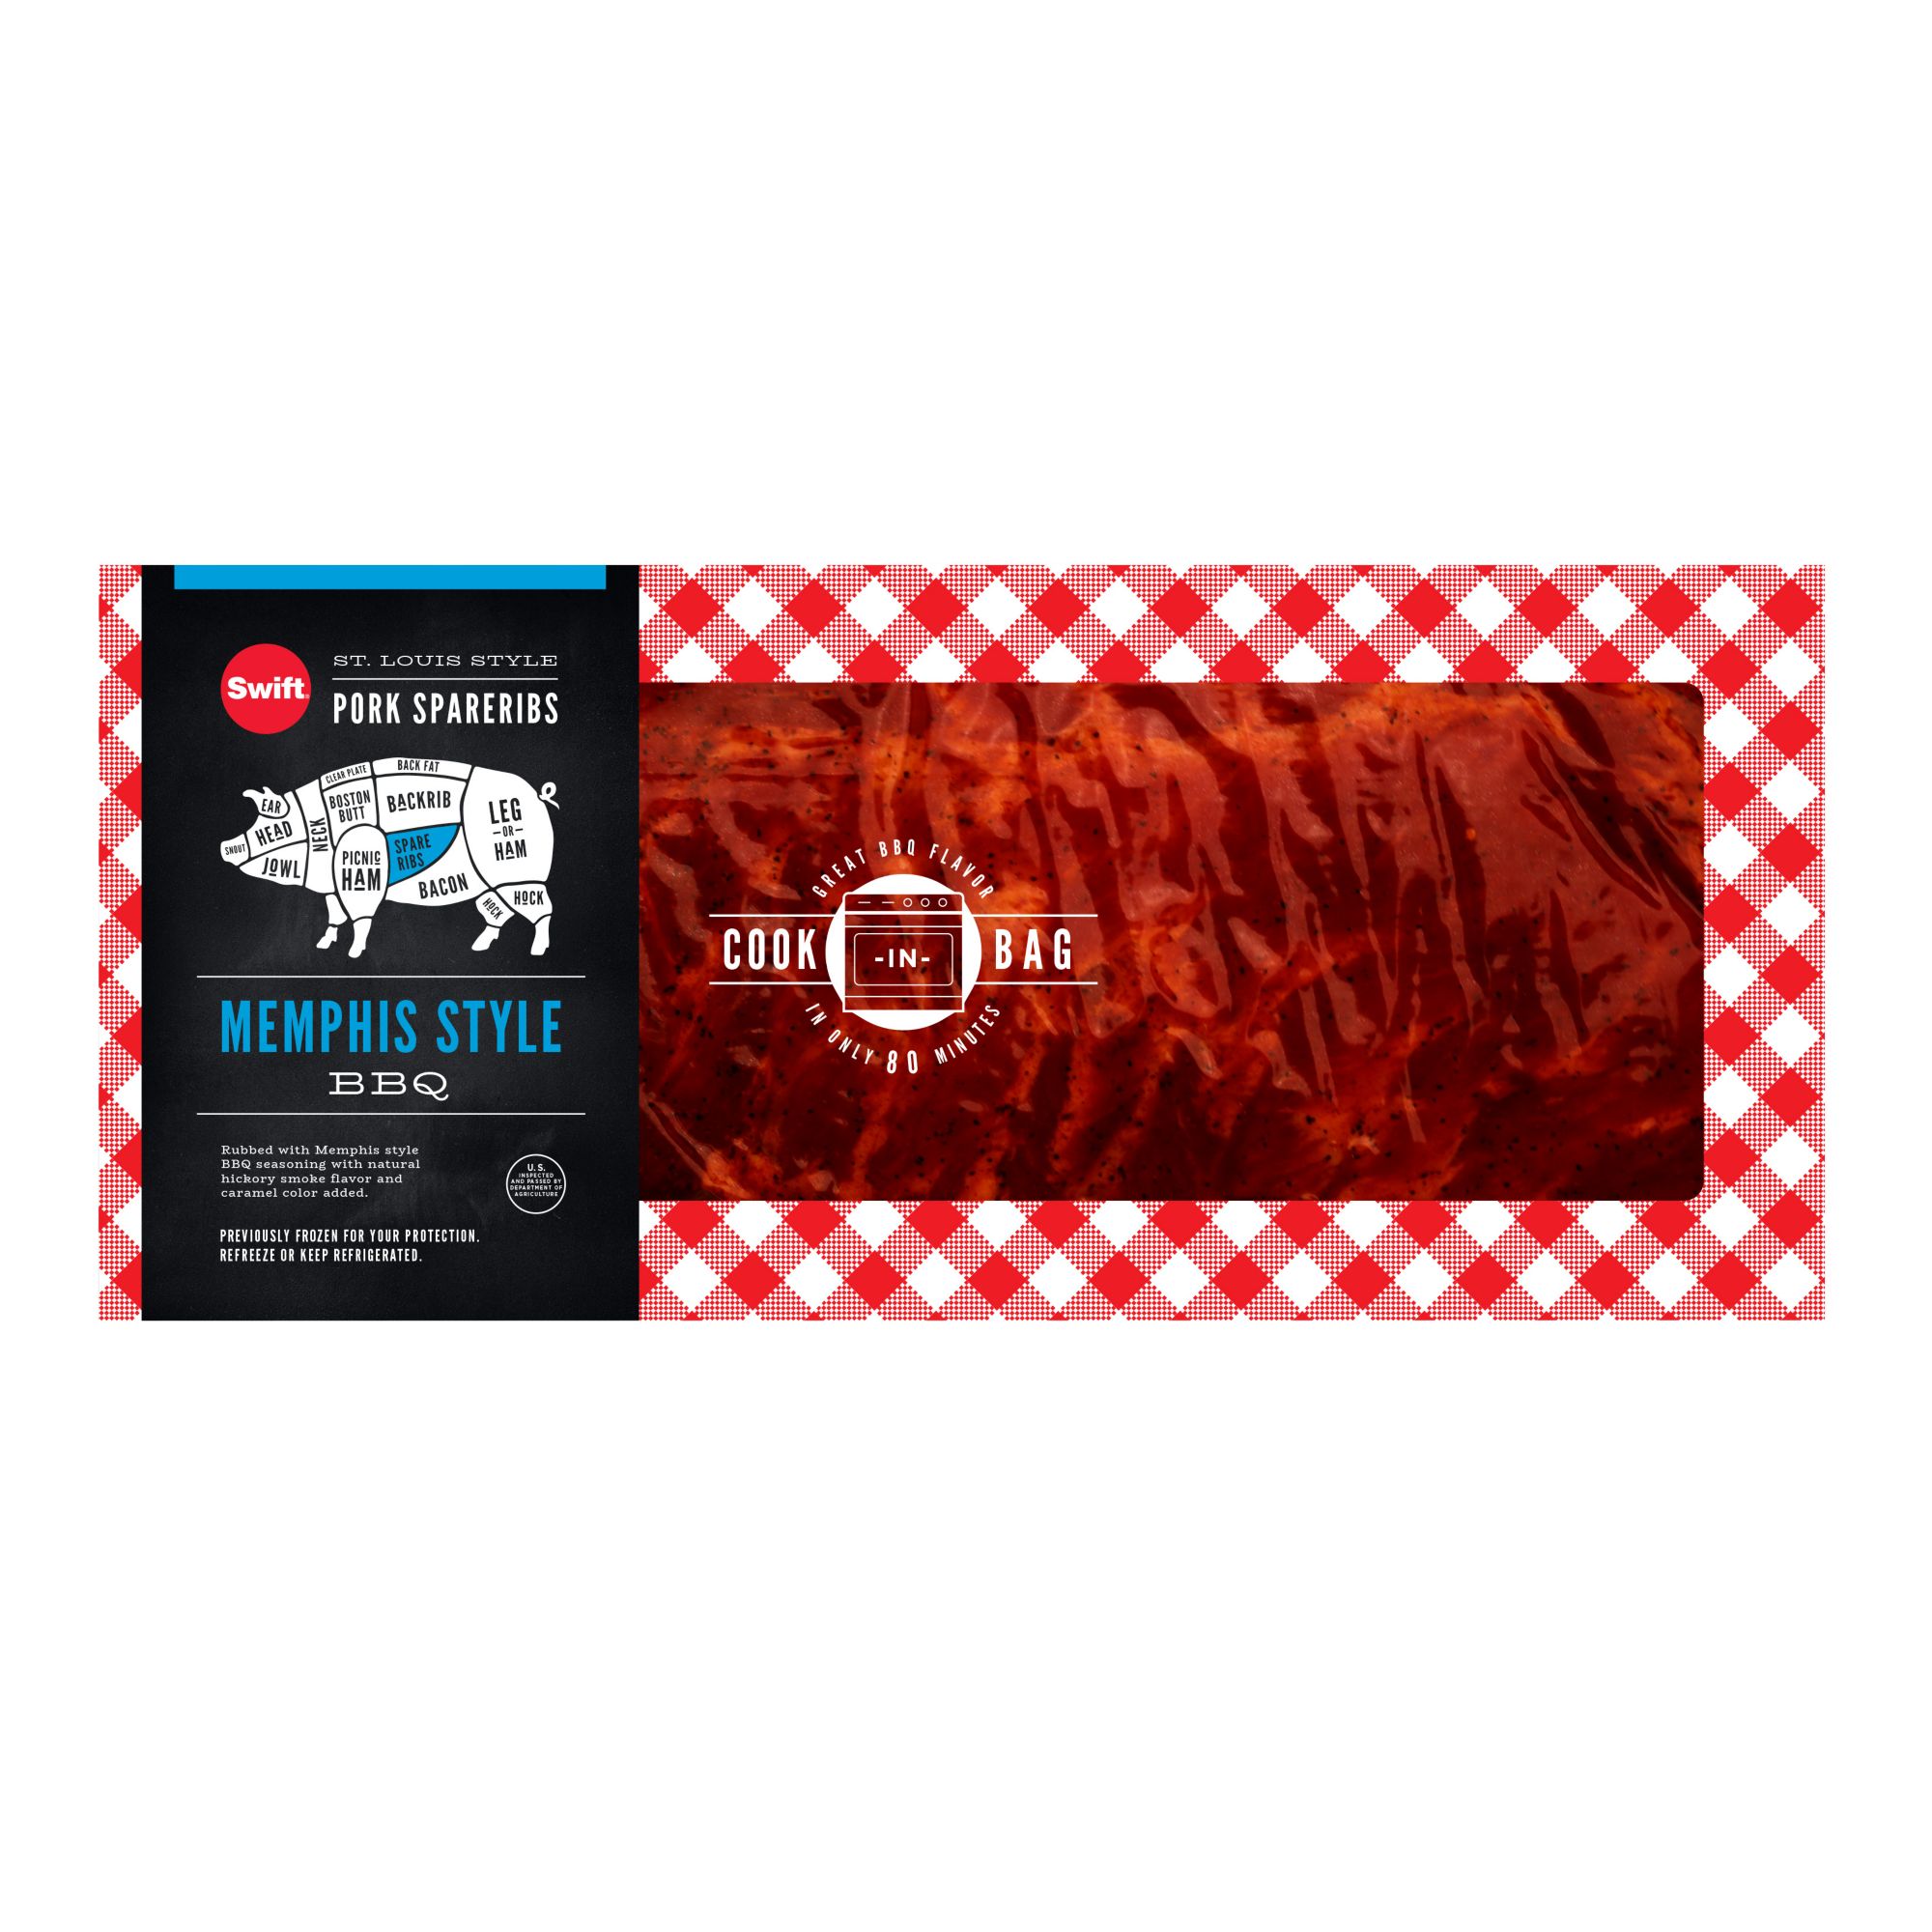 Swift Cook-In-Bag Memphis BBQ Style Pork Spareribs,  2.75-3.5 lbs.